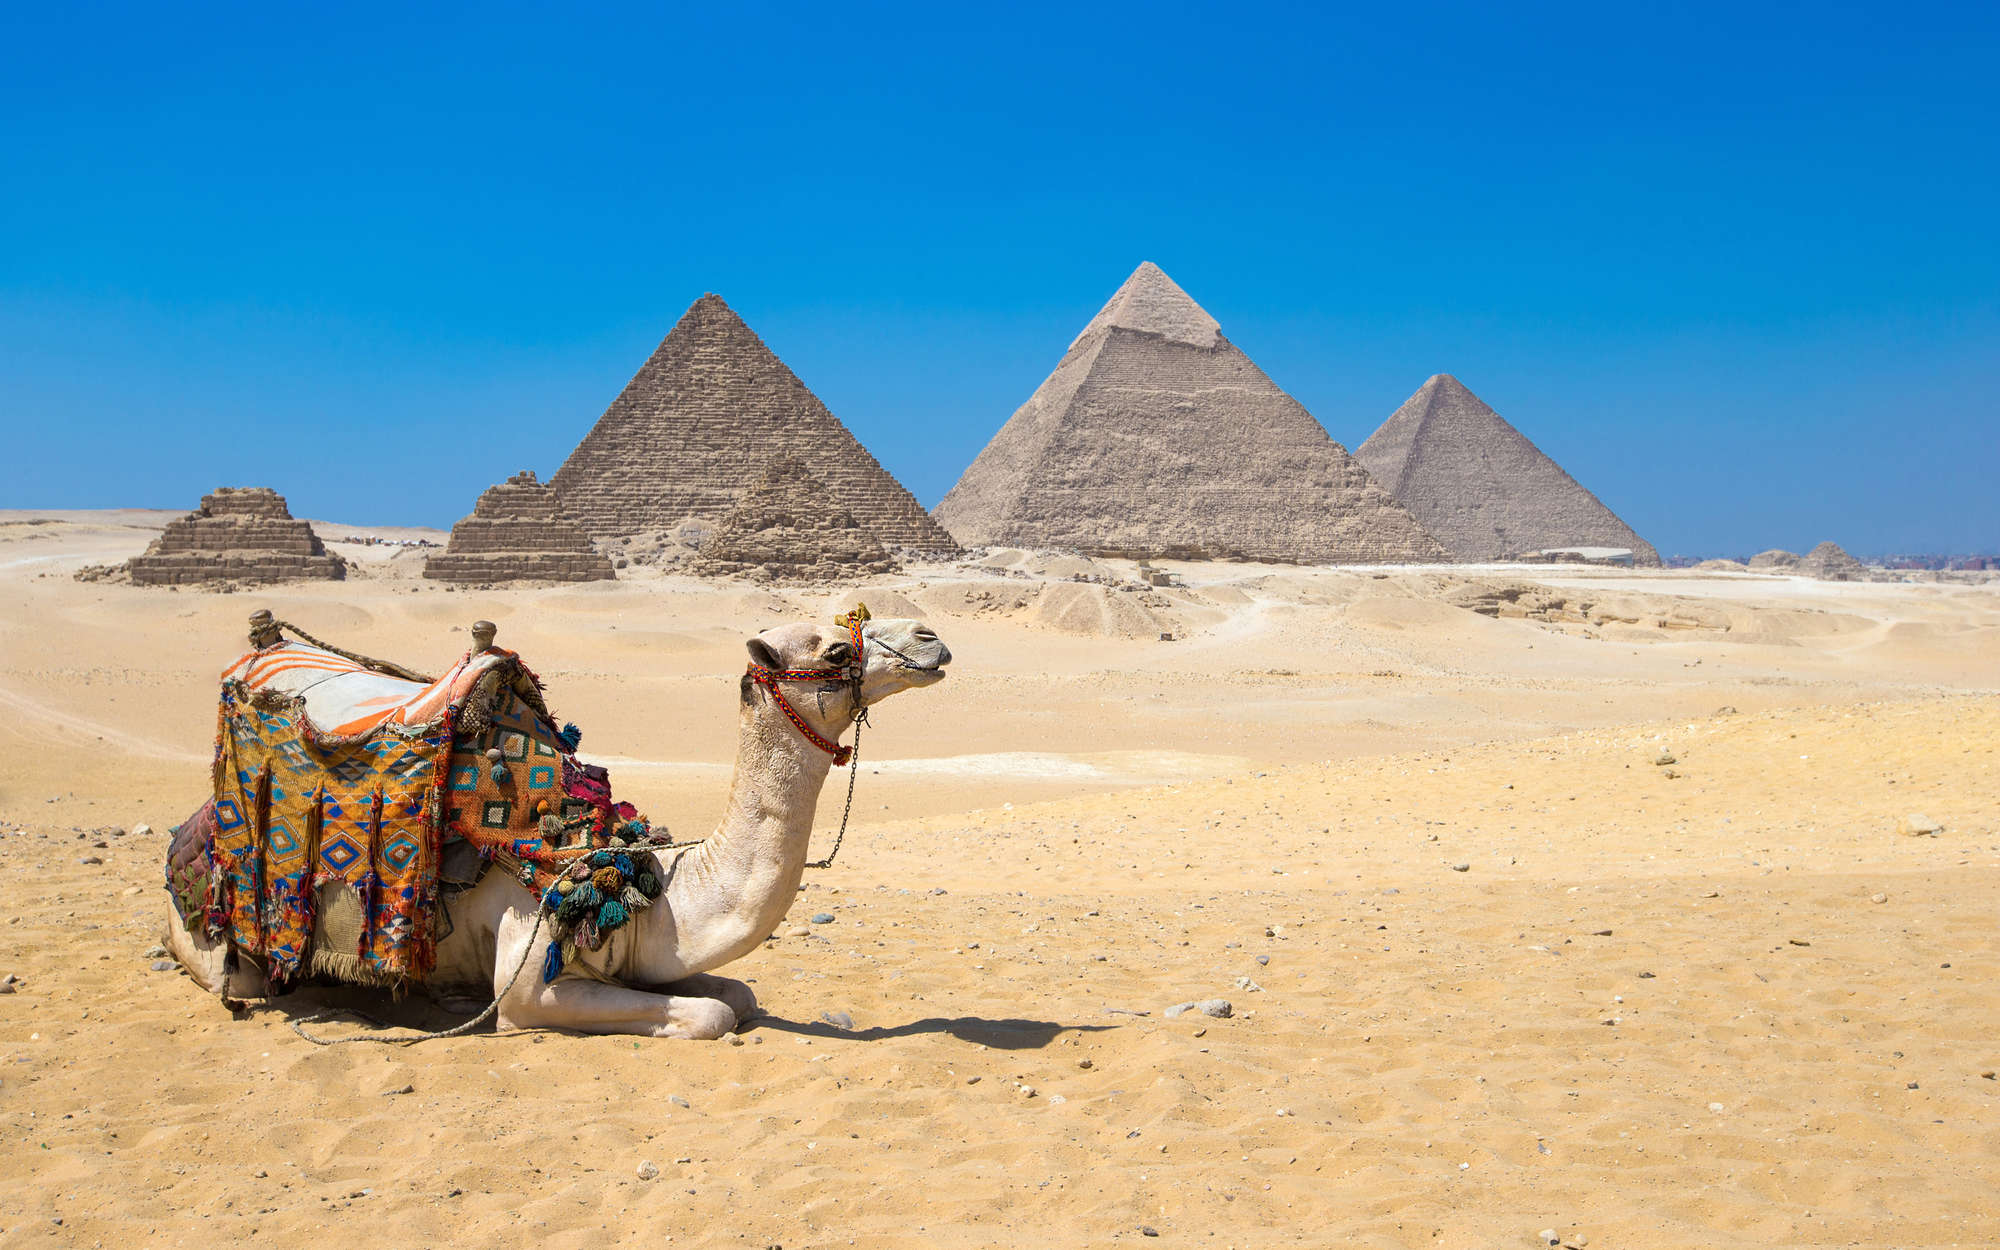             Pyramids of Giza with Camel Wallpaper - Textured non-woven
        